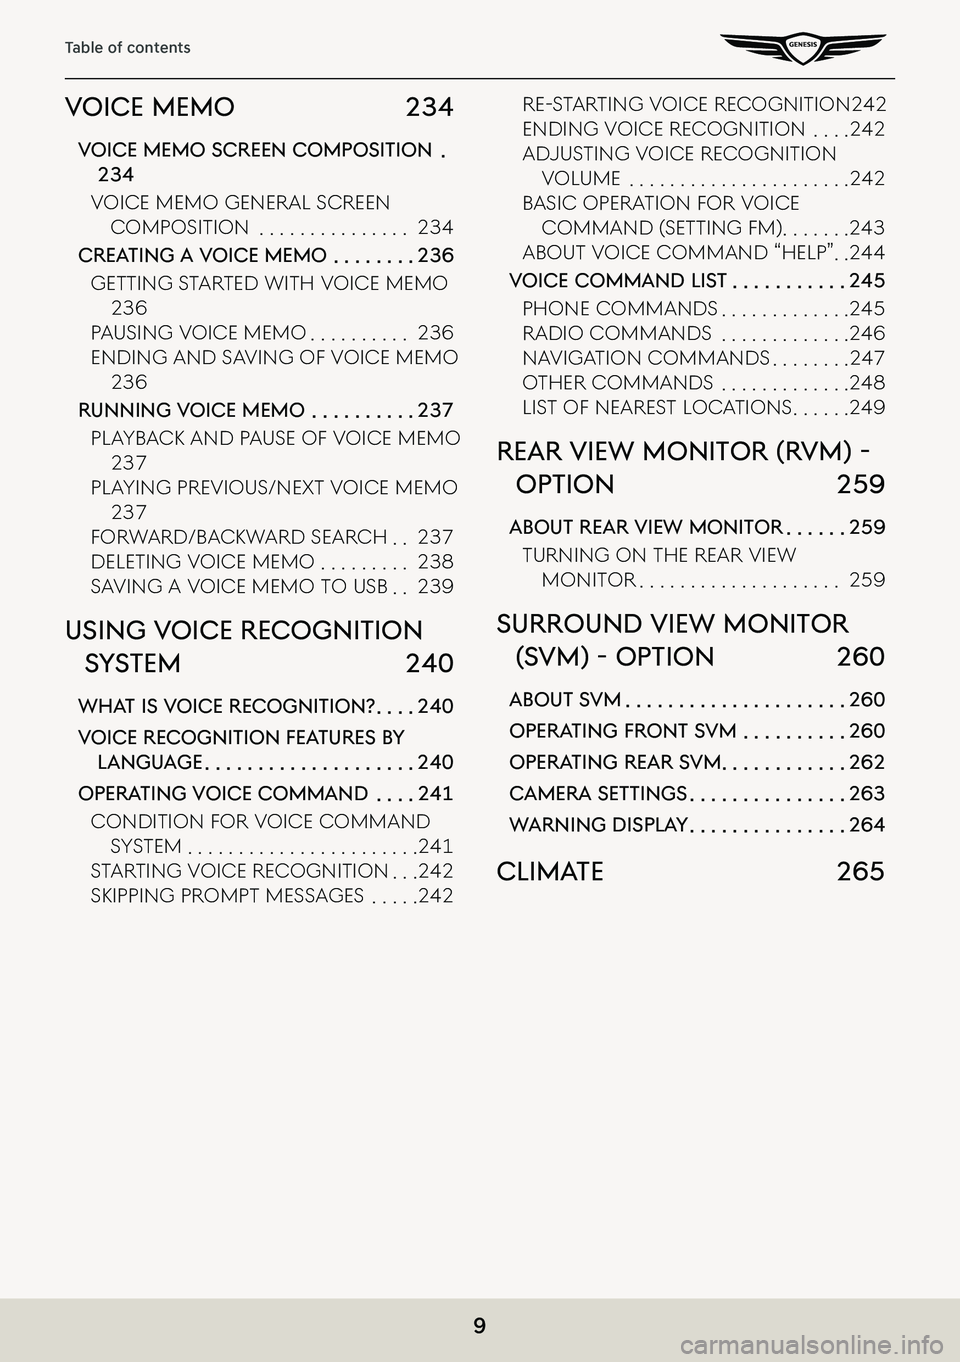 GENESIS G80 2021  Premium Navigation Manual 9
Table of contents
Voice memo 234
Voice memo screen composiTion  .
234
VoiCe MeMo geneRal sCReen 
CoMposition  . . . . . . . . . . . . . . .234
creaTing a Voice memo  . . . . . . . .236
getting s taR